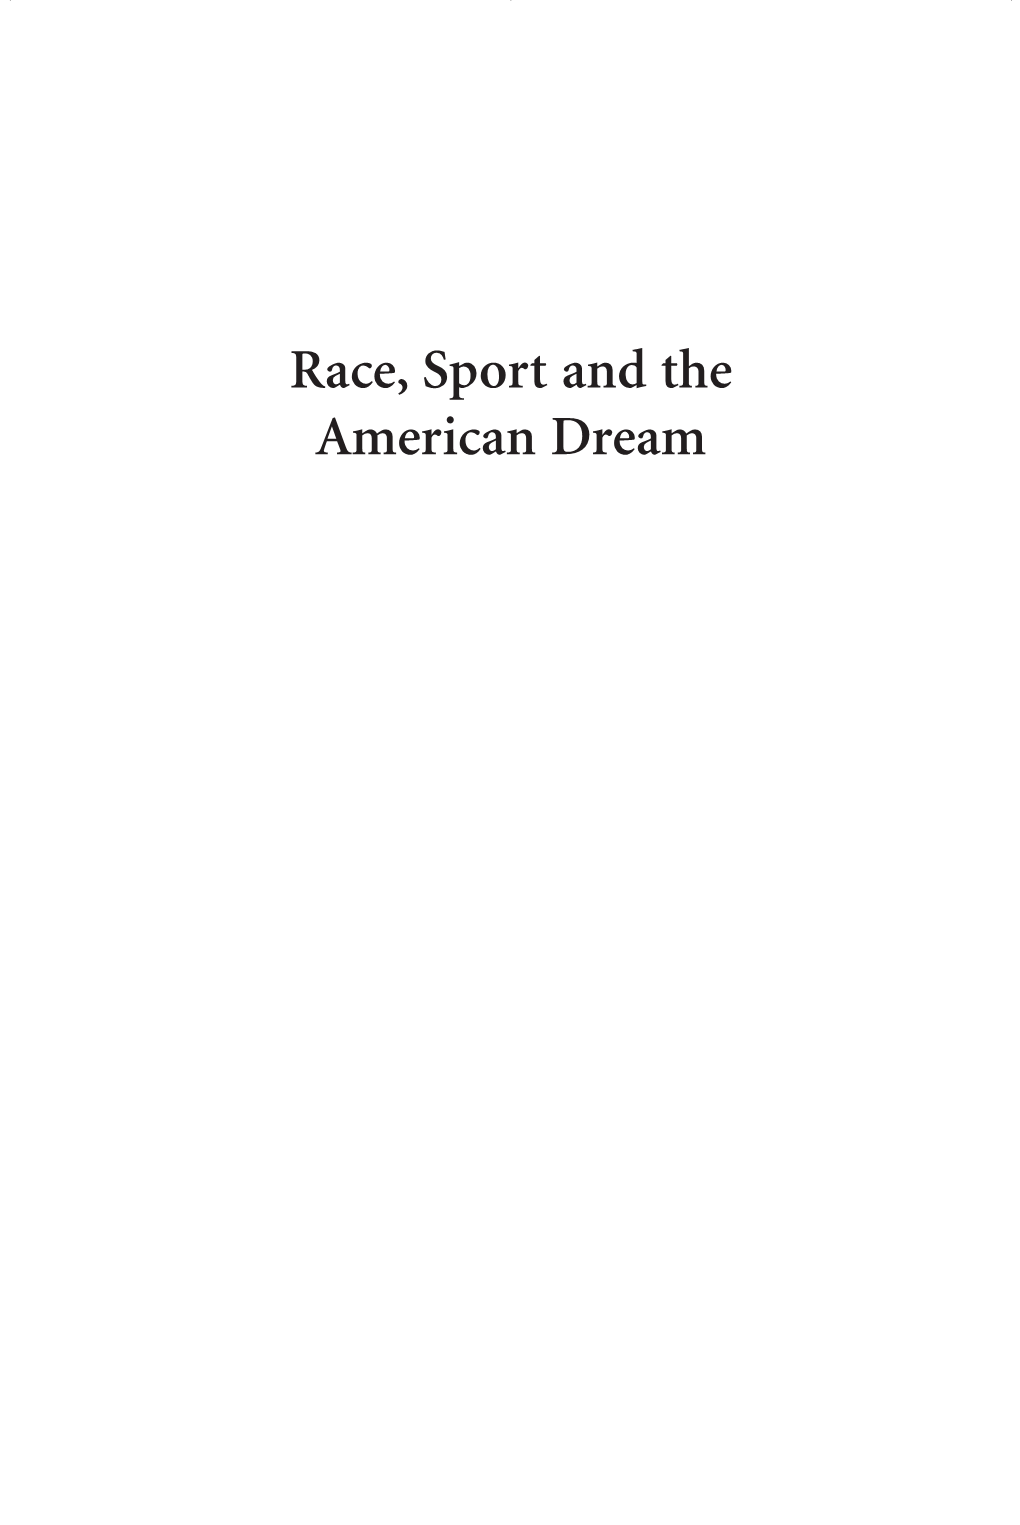 Race, Sport and the American Dream 00 Smith 2E Fmt 7/13/09 2:10 PM Page Ii 00 Smith 2E Fmt 7/13/09 2:10 PM Page Iii